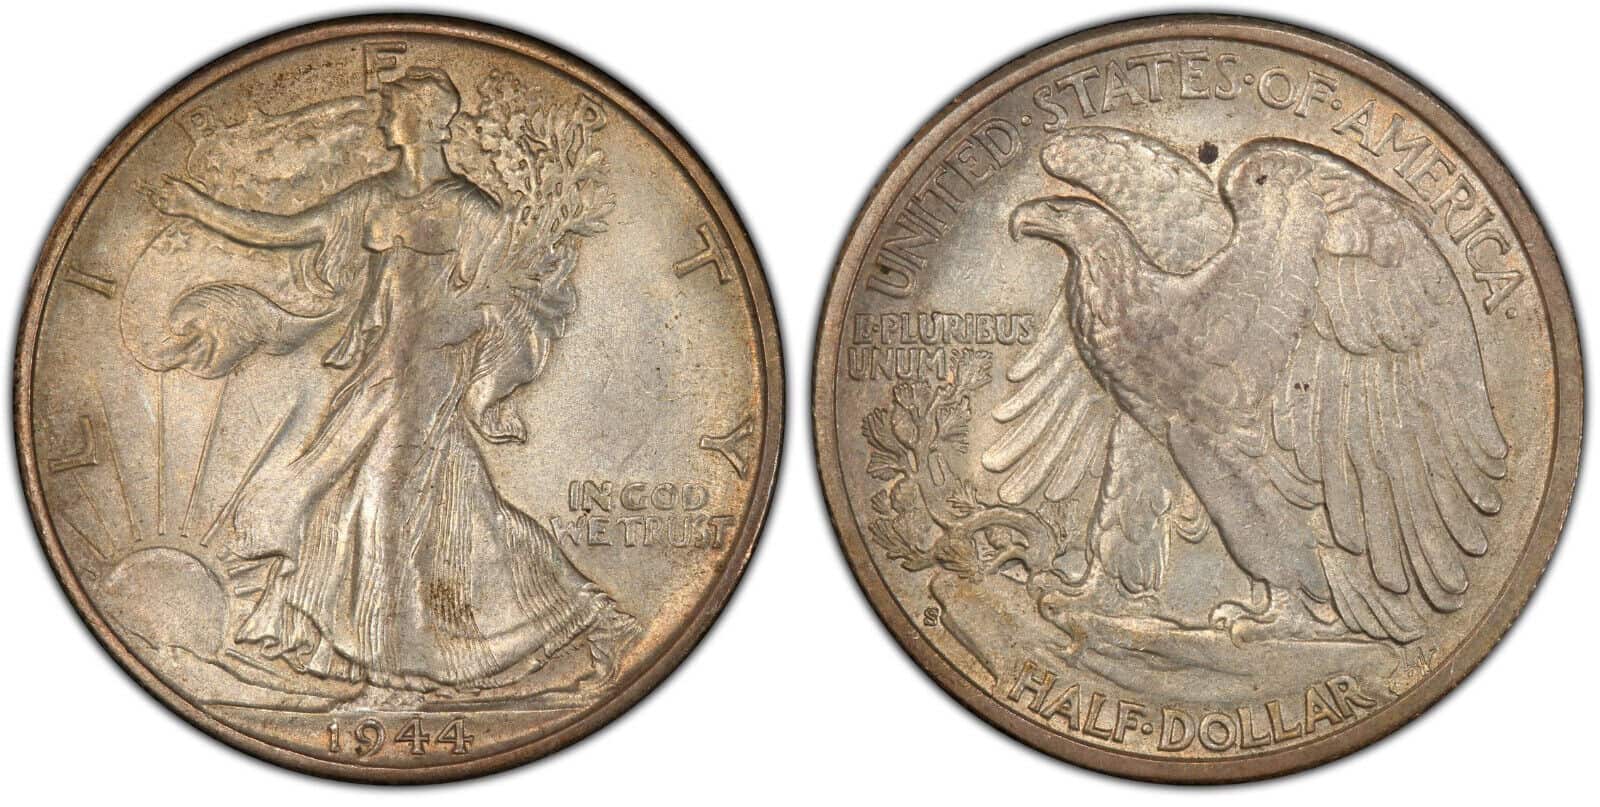 1944 Half Dollar Repunched S Mint Mark Error